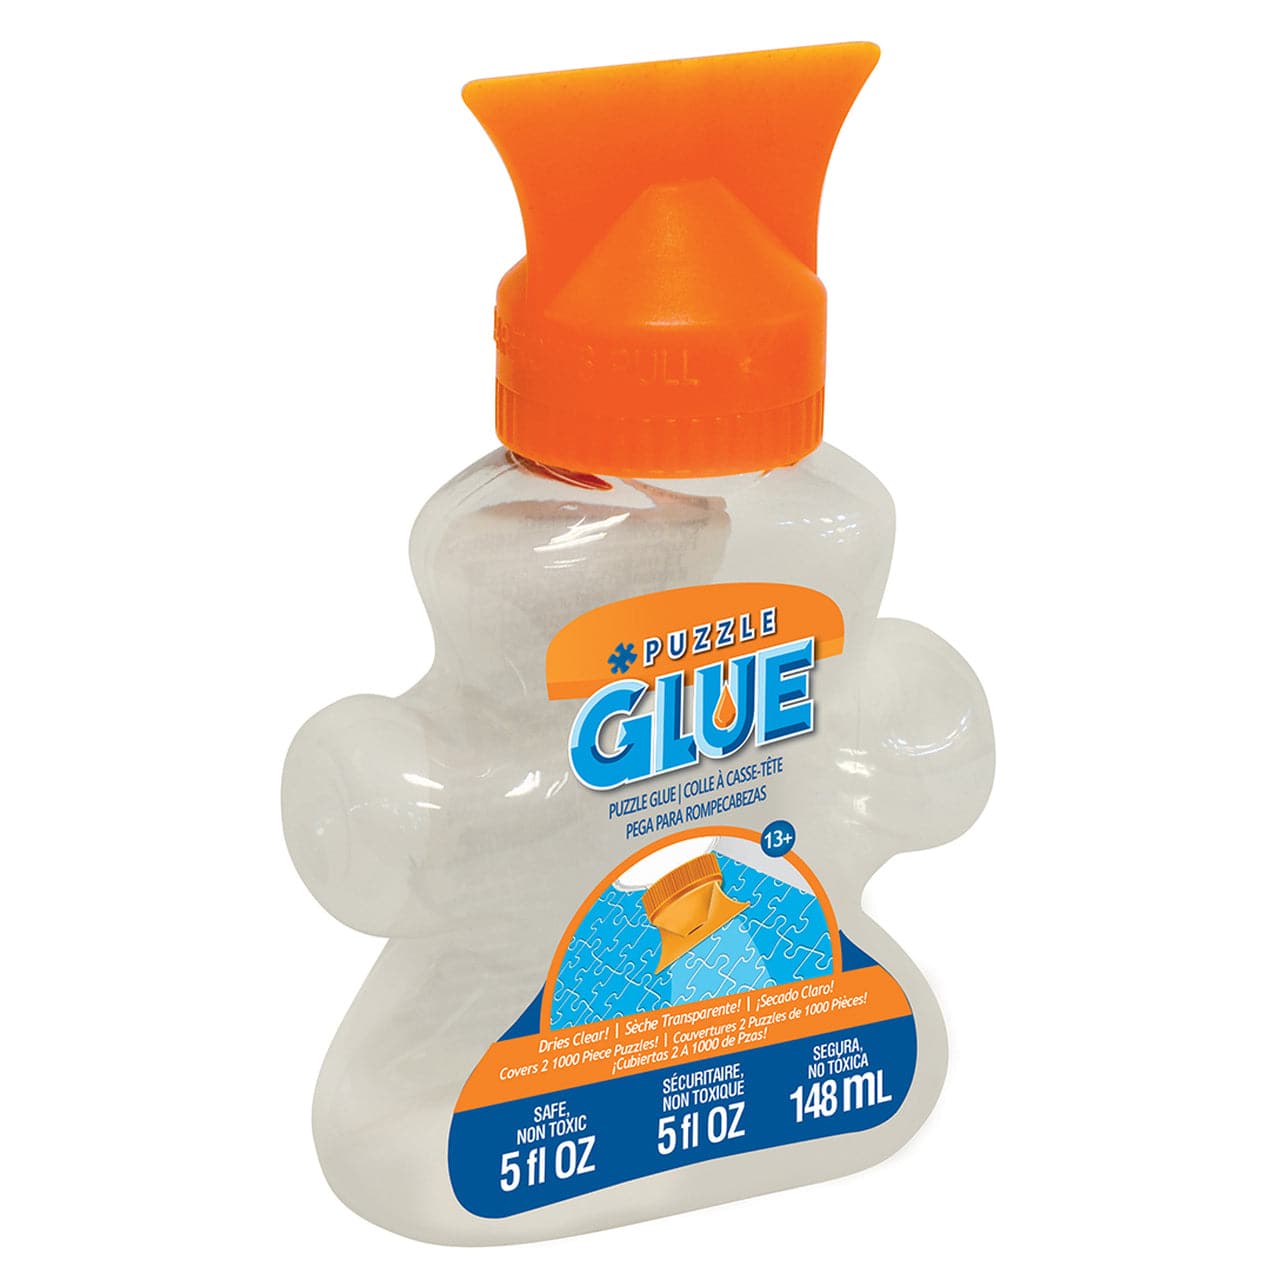 New squeeze bottles, sleeves revamp Elmer's Glue